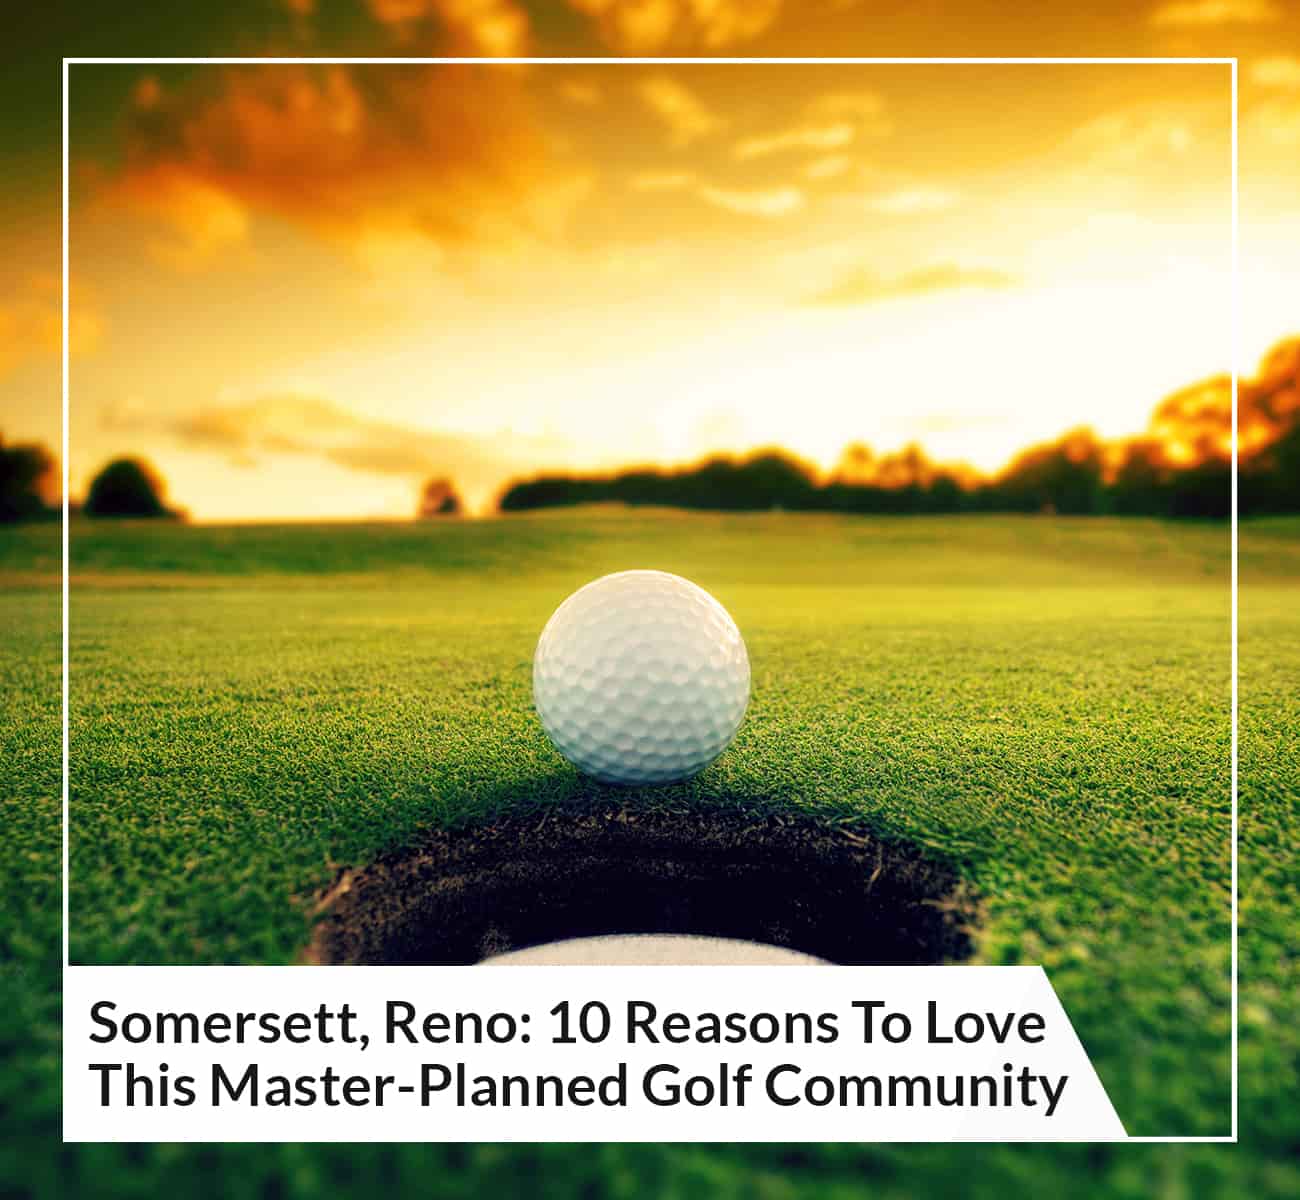 Somersett, Reno: 10 Reasons To Love This Master-Planned Golf Community - Main Image